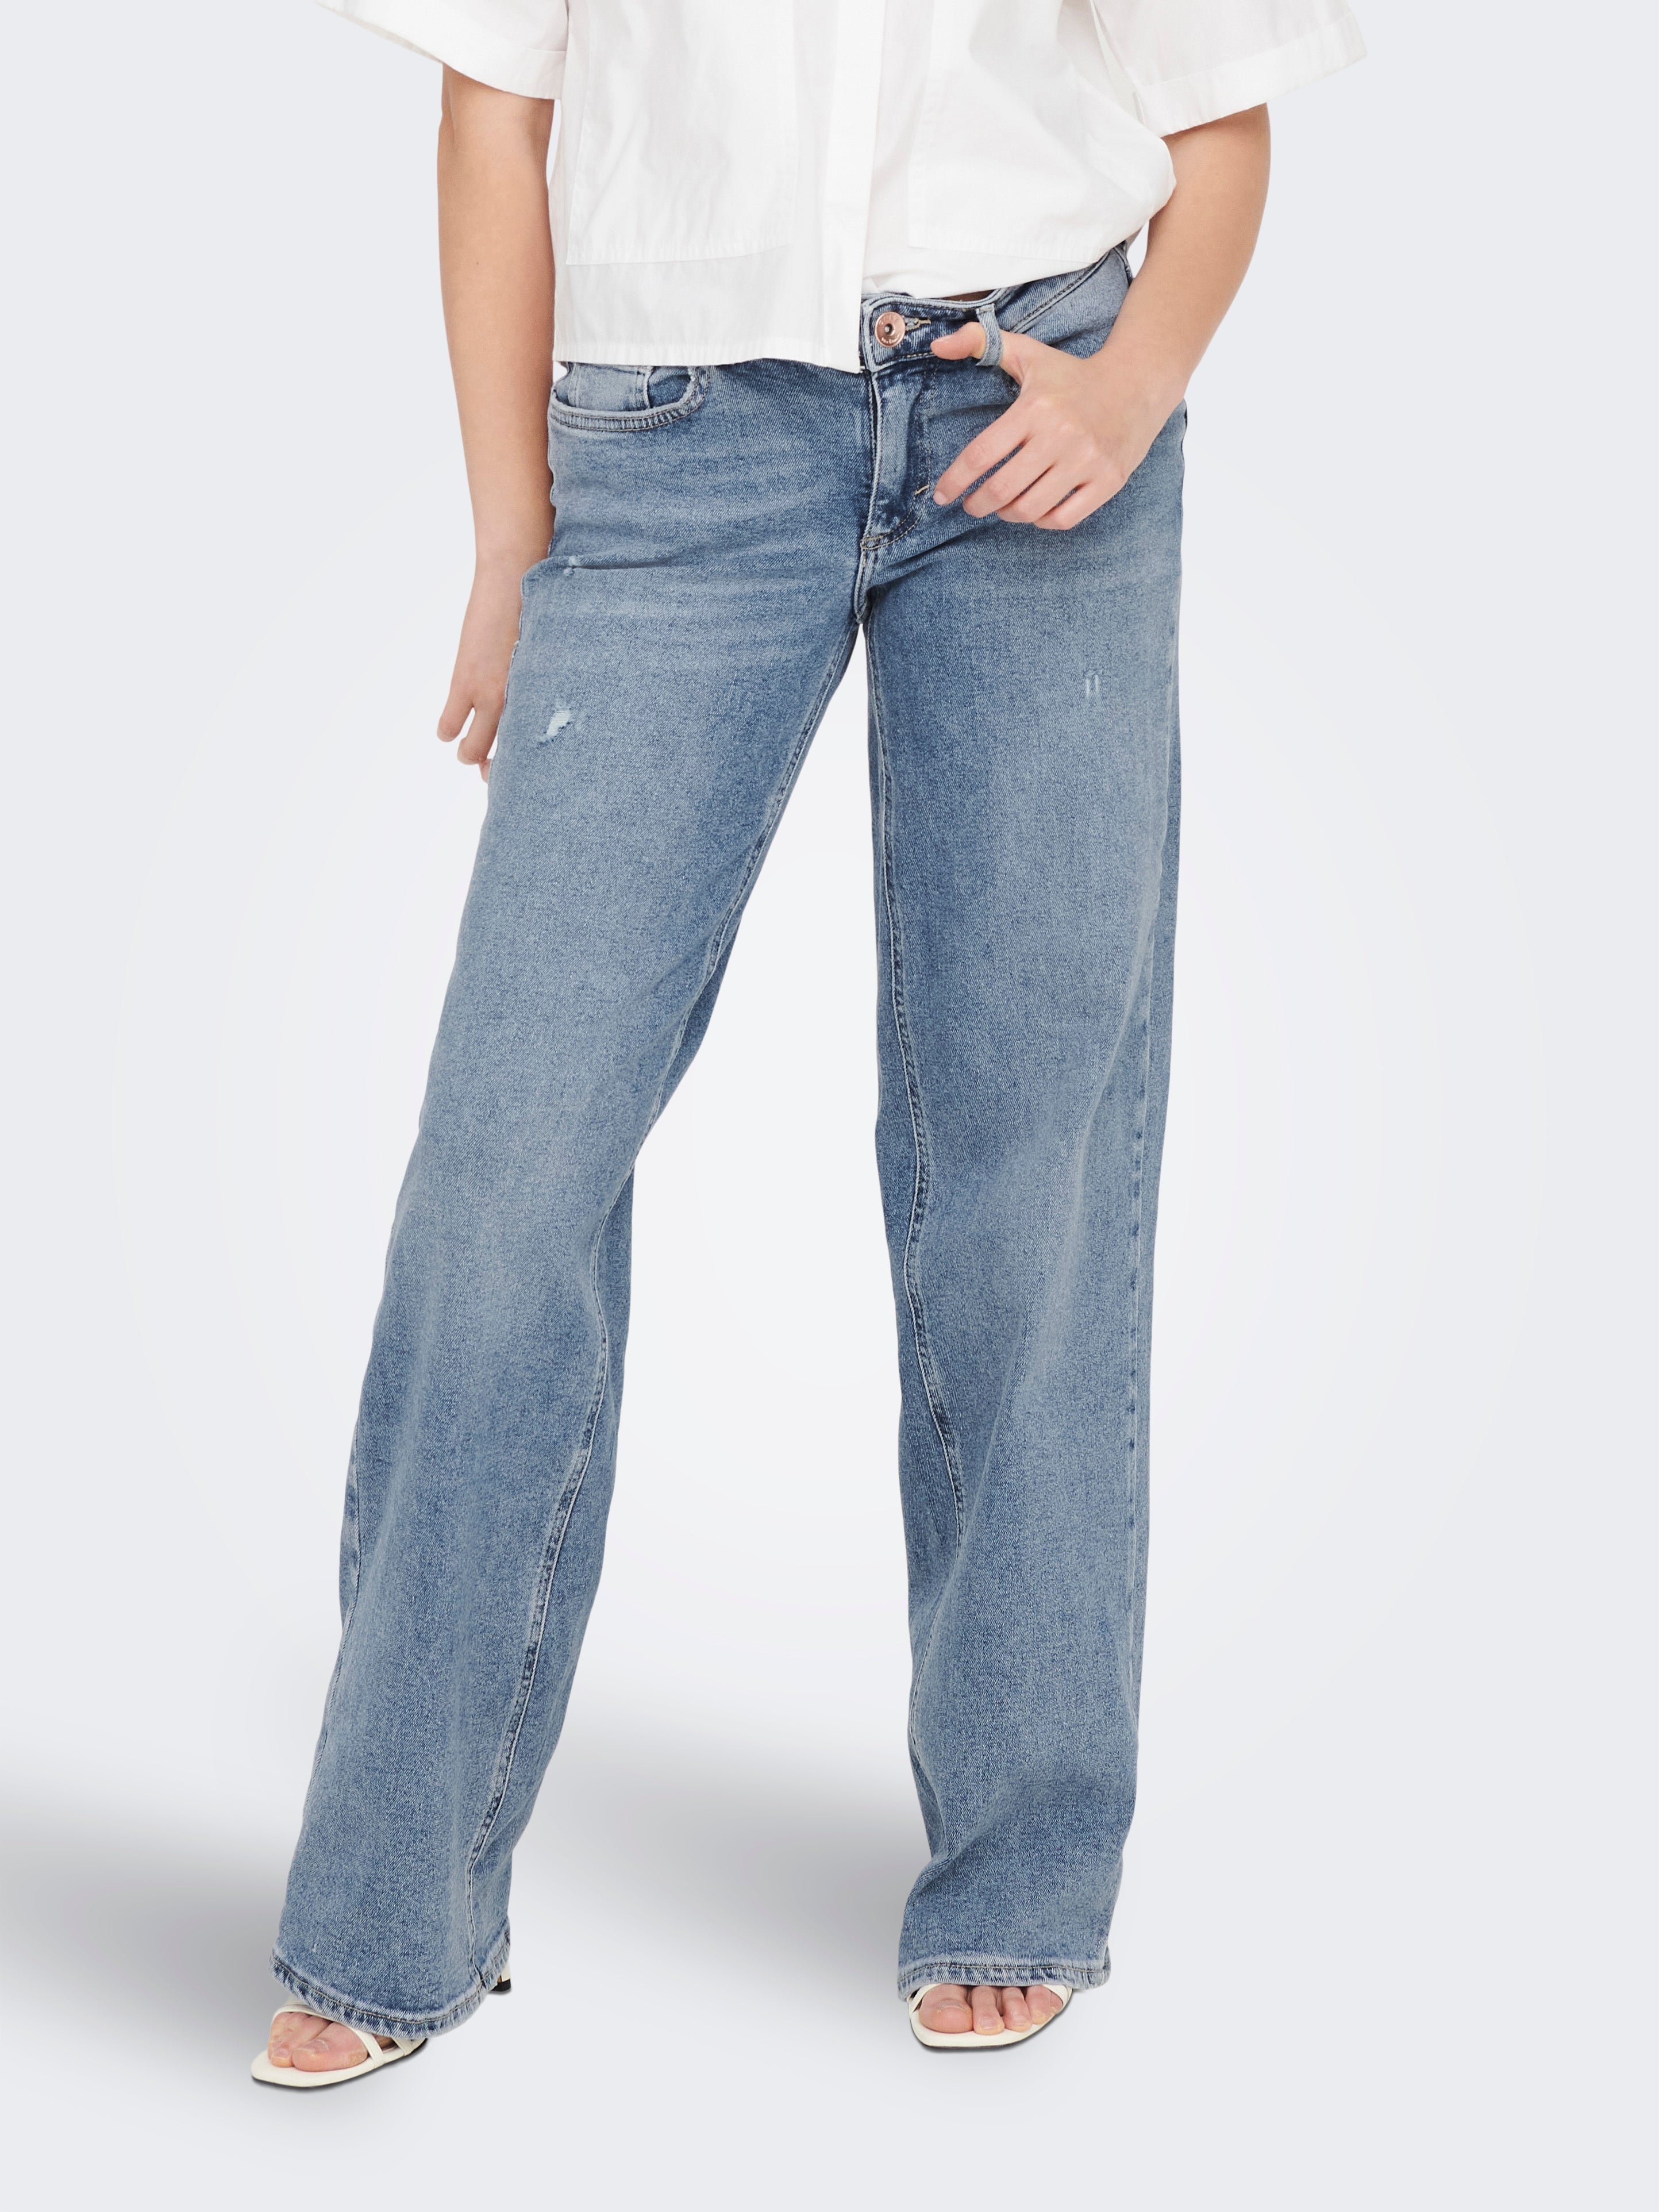 DKNY Jeans Jeans taille basse bleu style d\u00e9contract\u00e9 Mode Jeans Jeans taille basse 